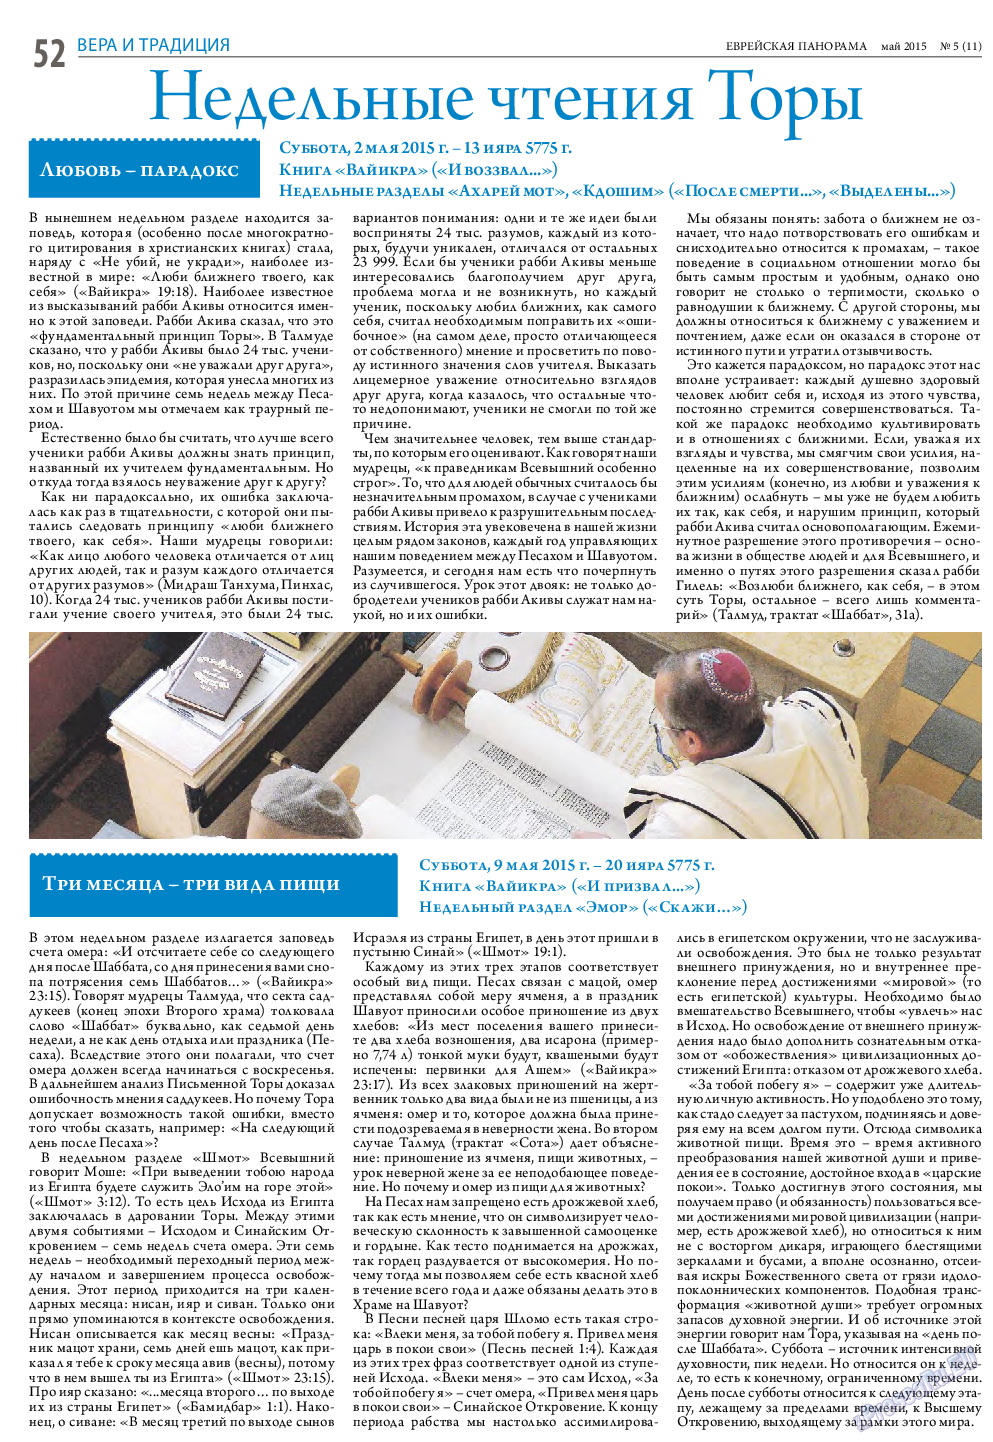 Еврейская панорама, газета. 2015 №5 стр.52